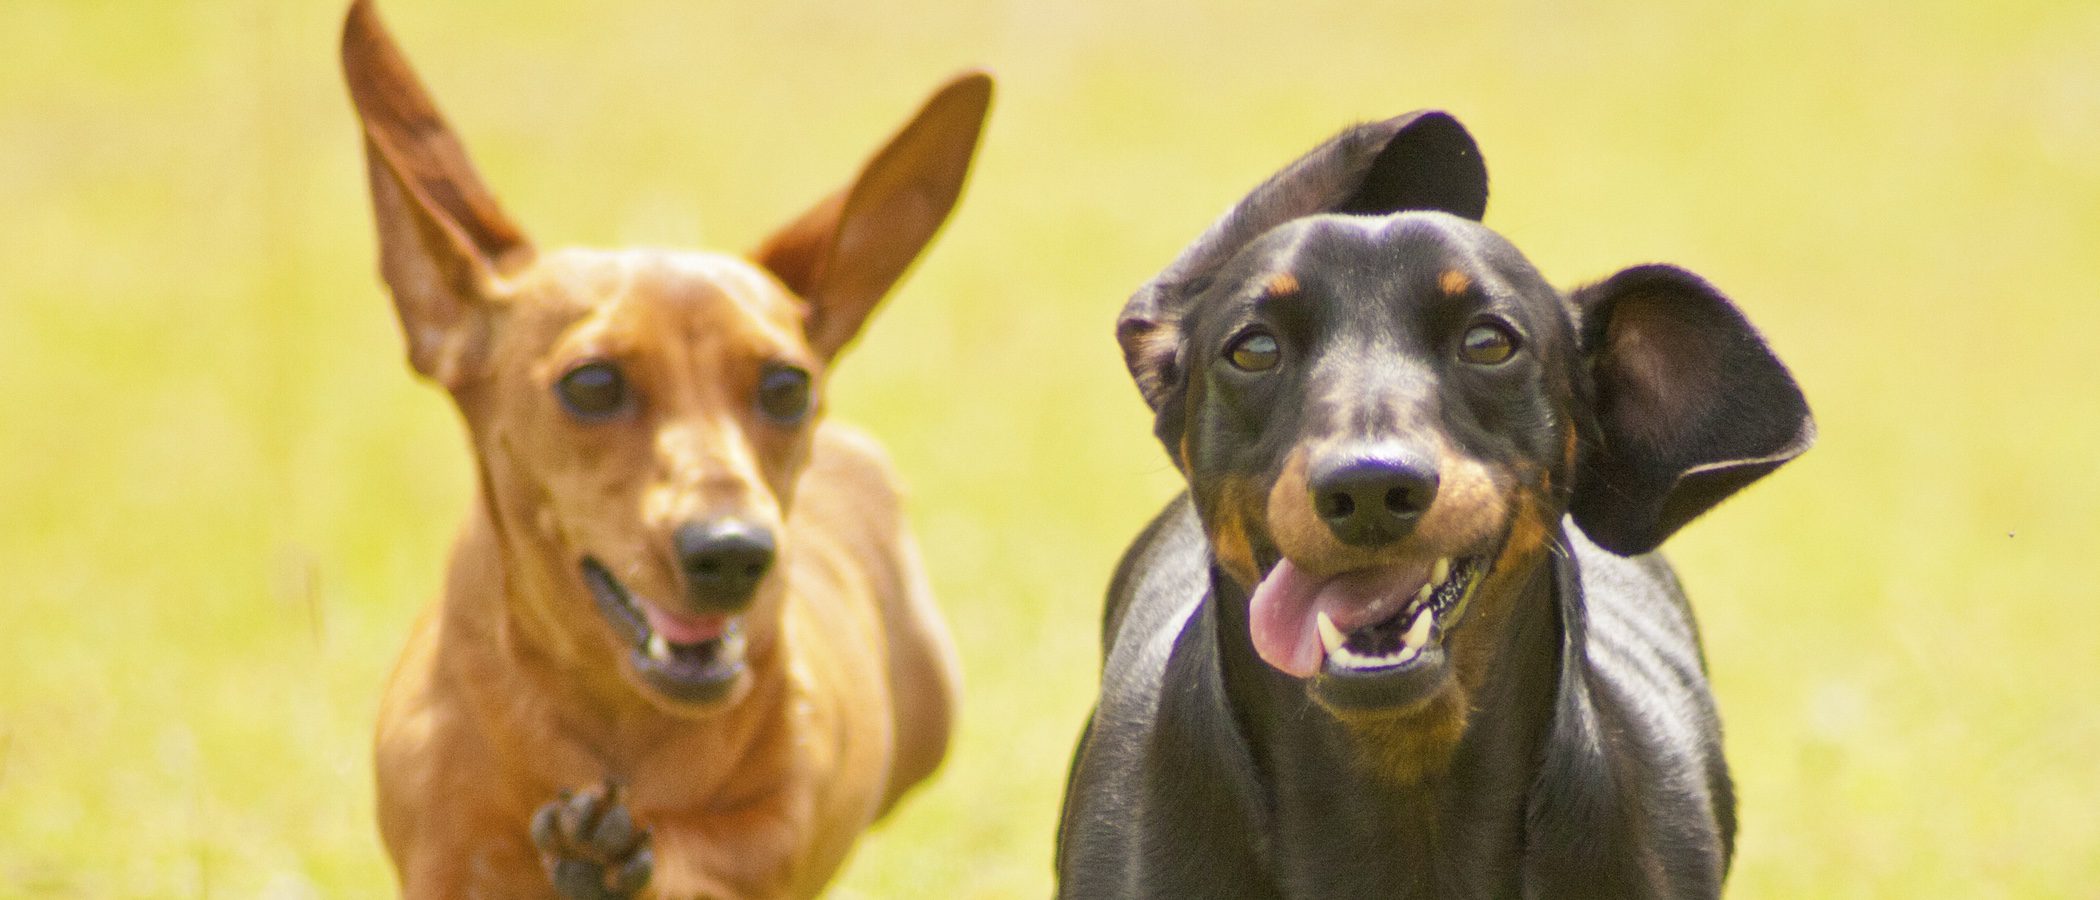 Razas de perros: Dachshund o perro salchicha